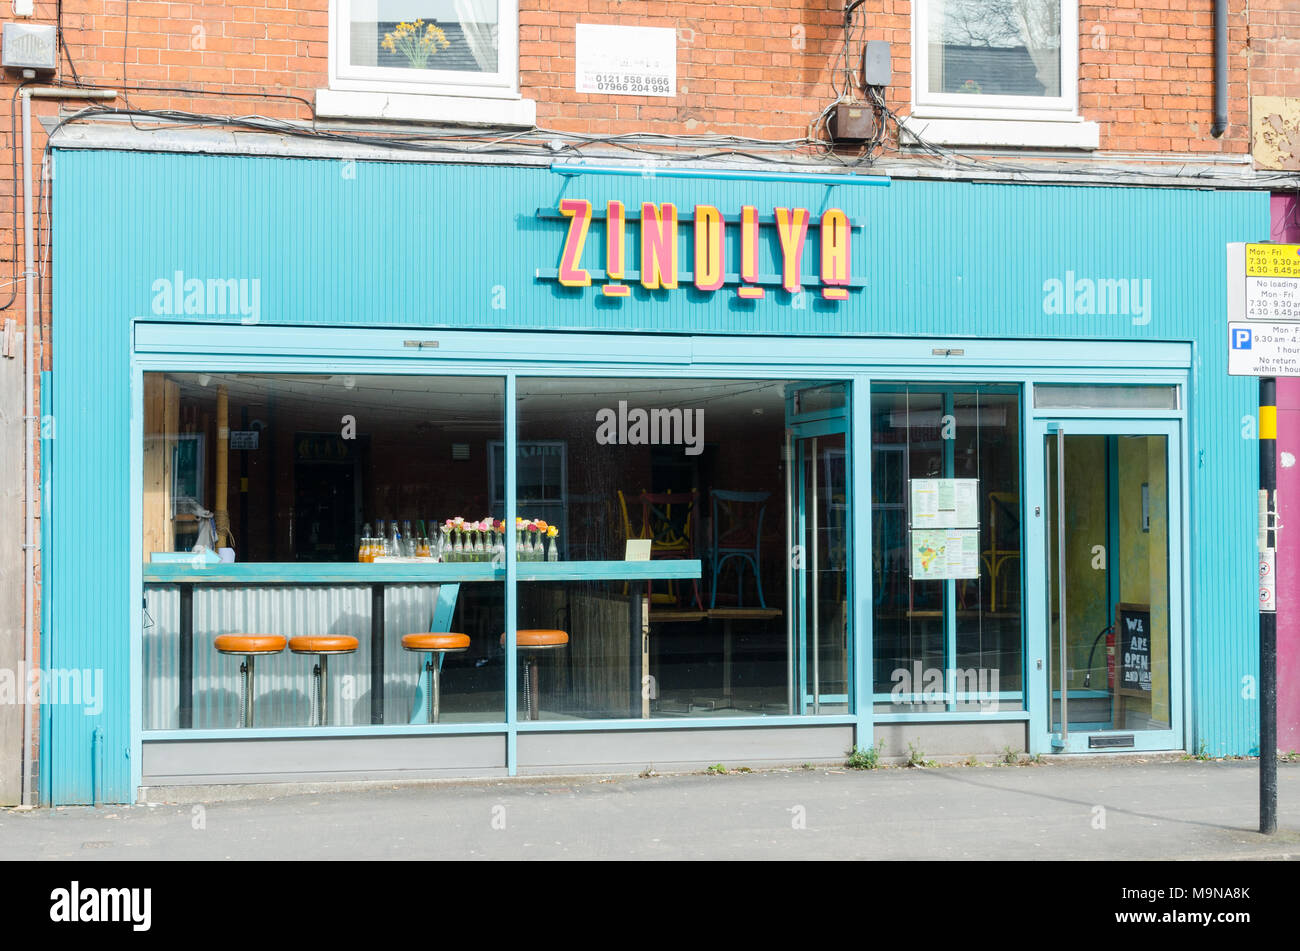 Zindiya Streatery and Bar indian street food restaurant in Moseley, Birmingham,UK Stock Photo